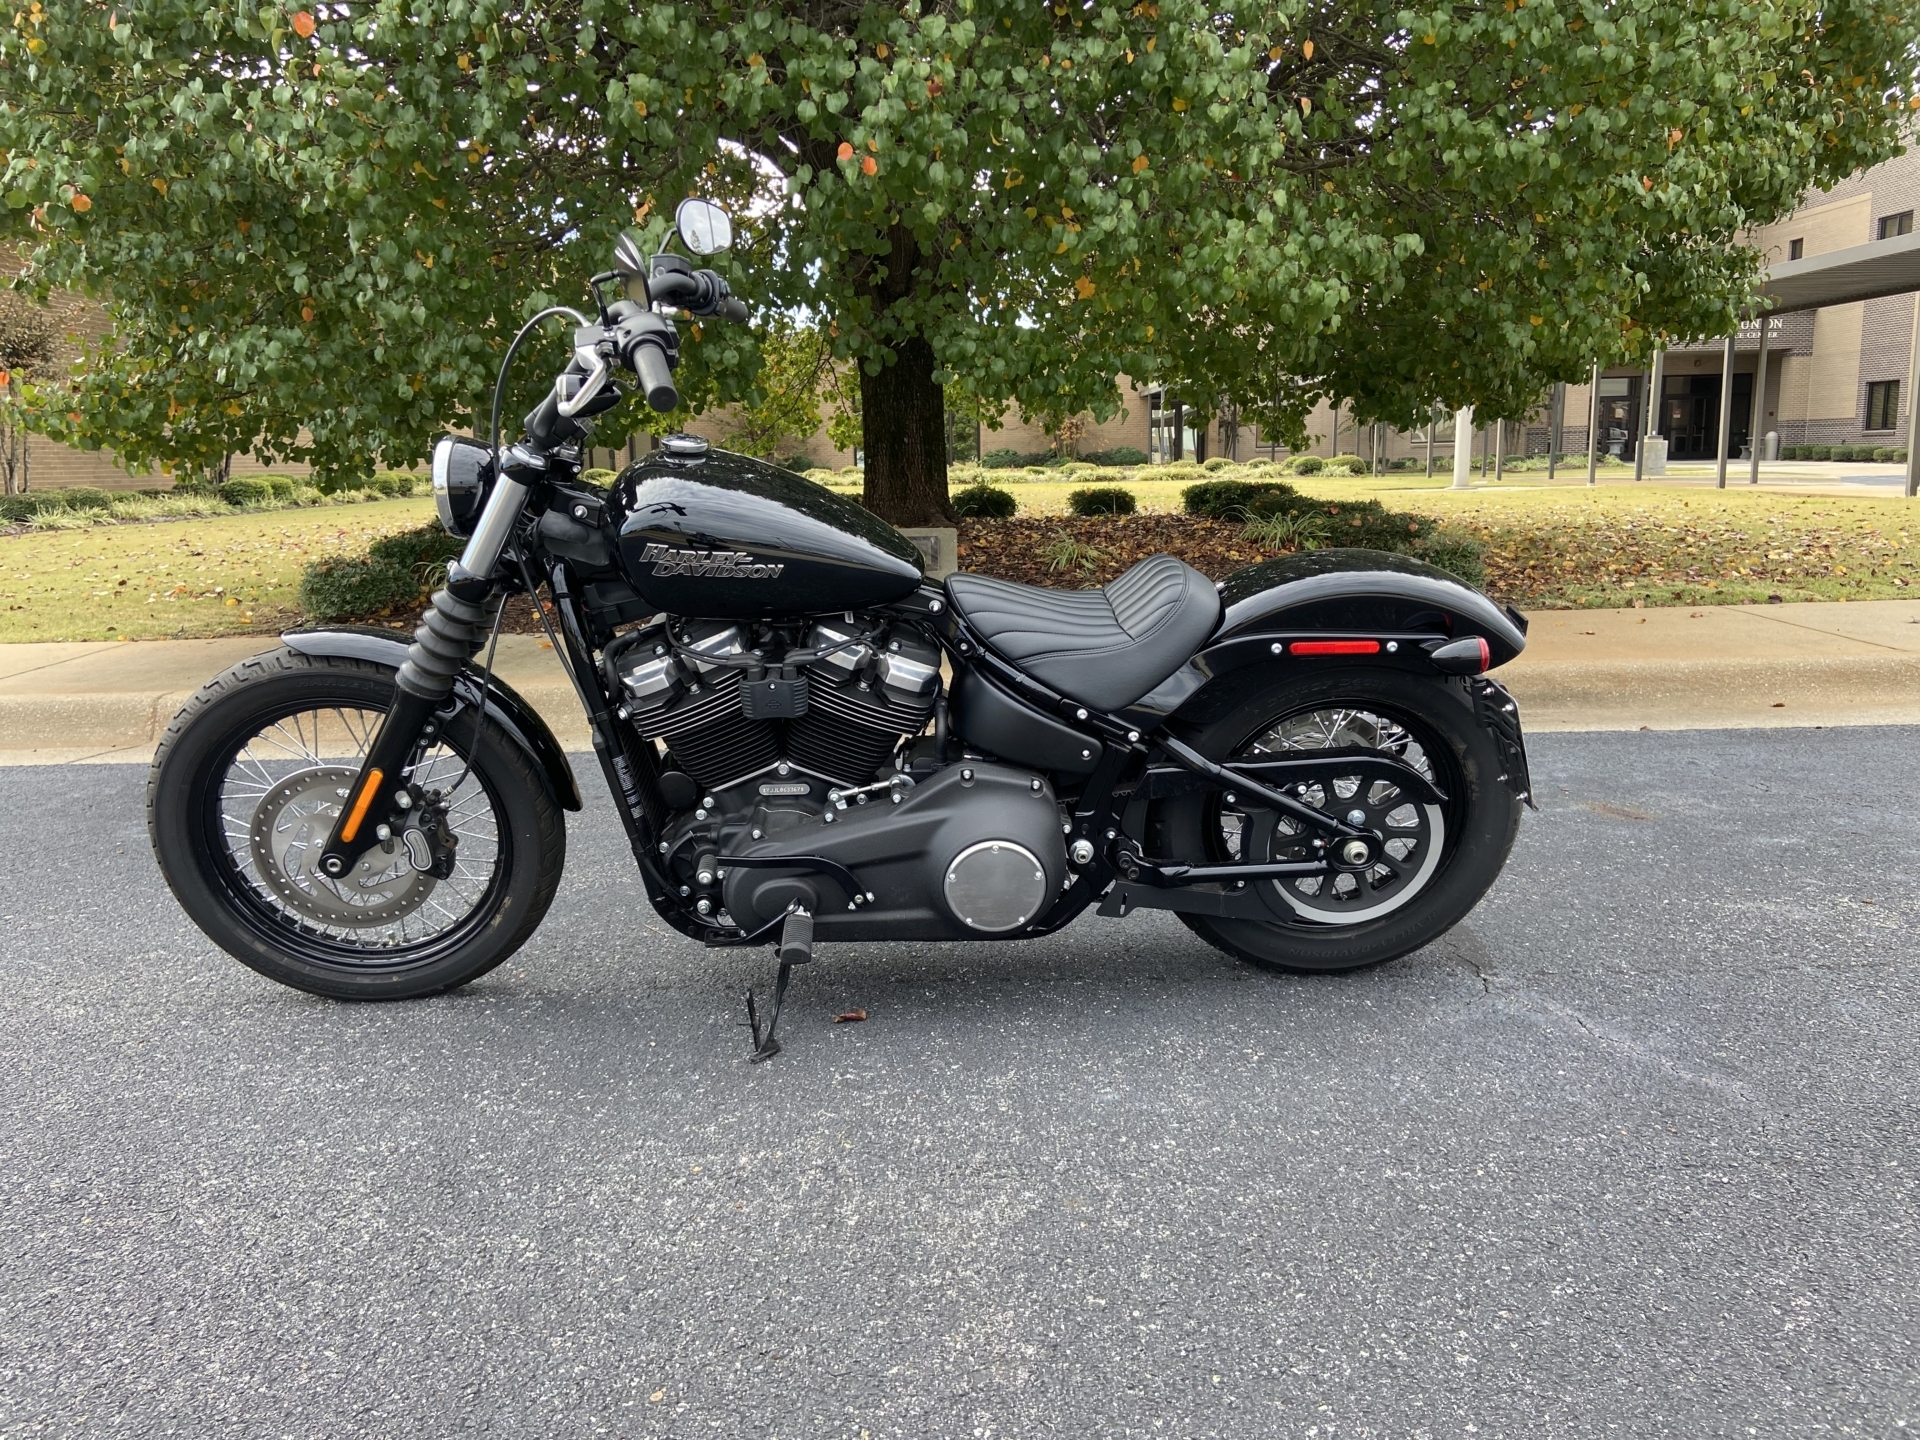 2021 Harley Davidson